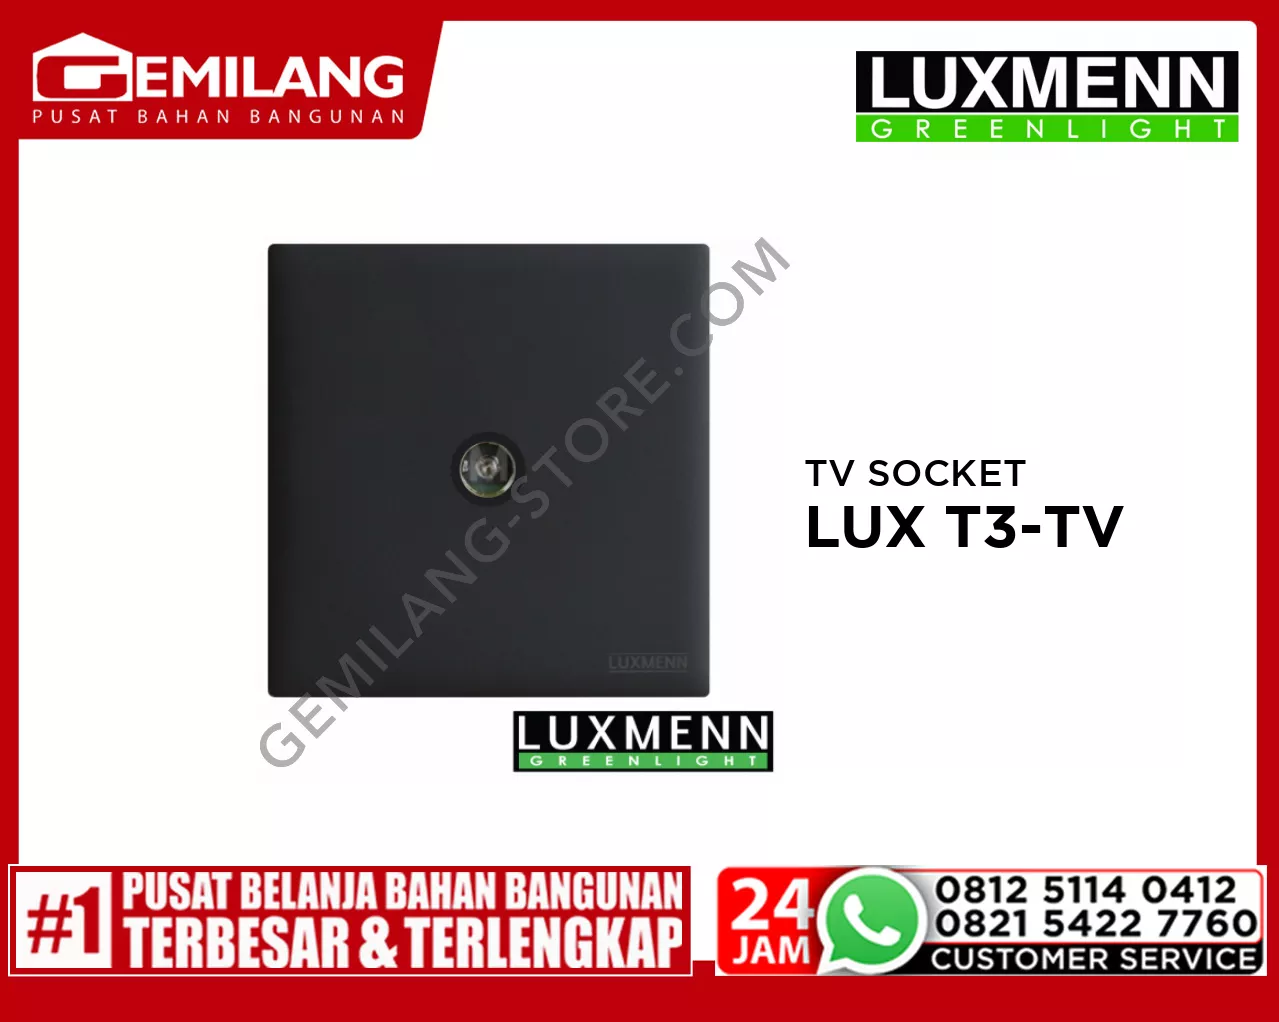 LUXMENN TV SOCKET LUX T3-TV BLACK